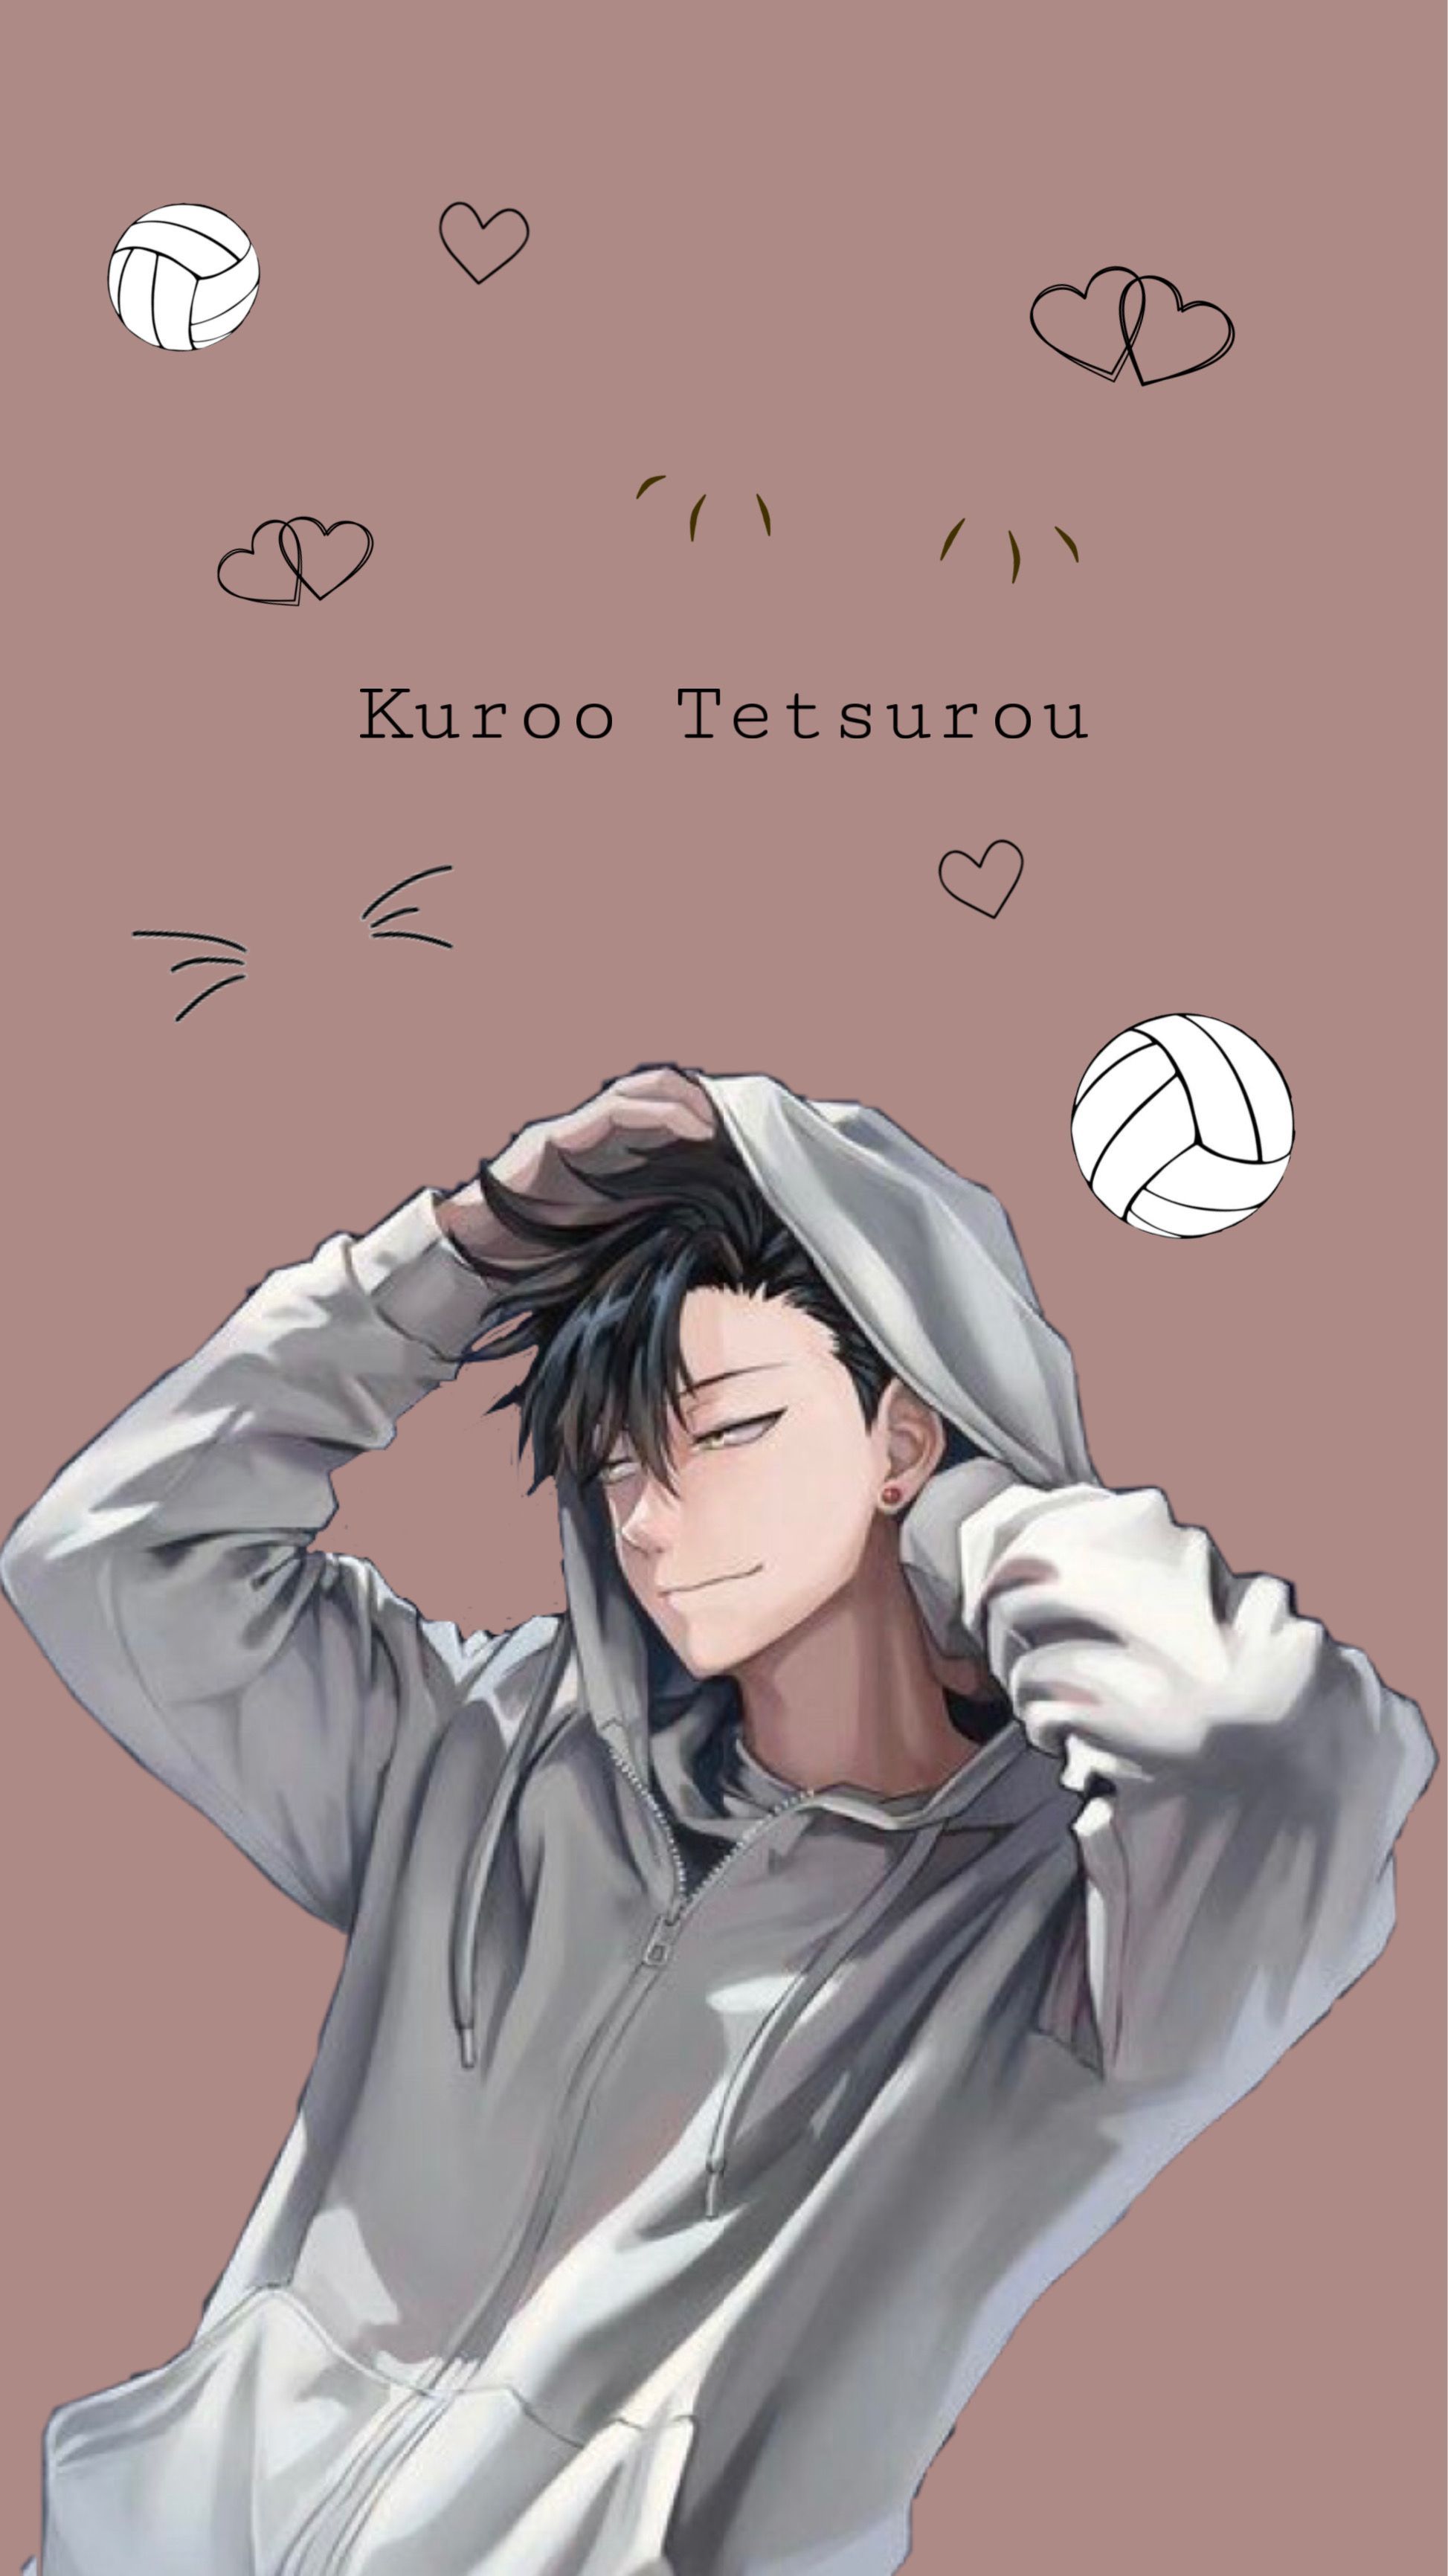 Kuroo is boyfriend material